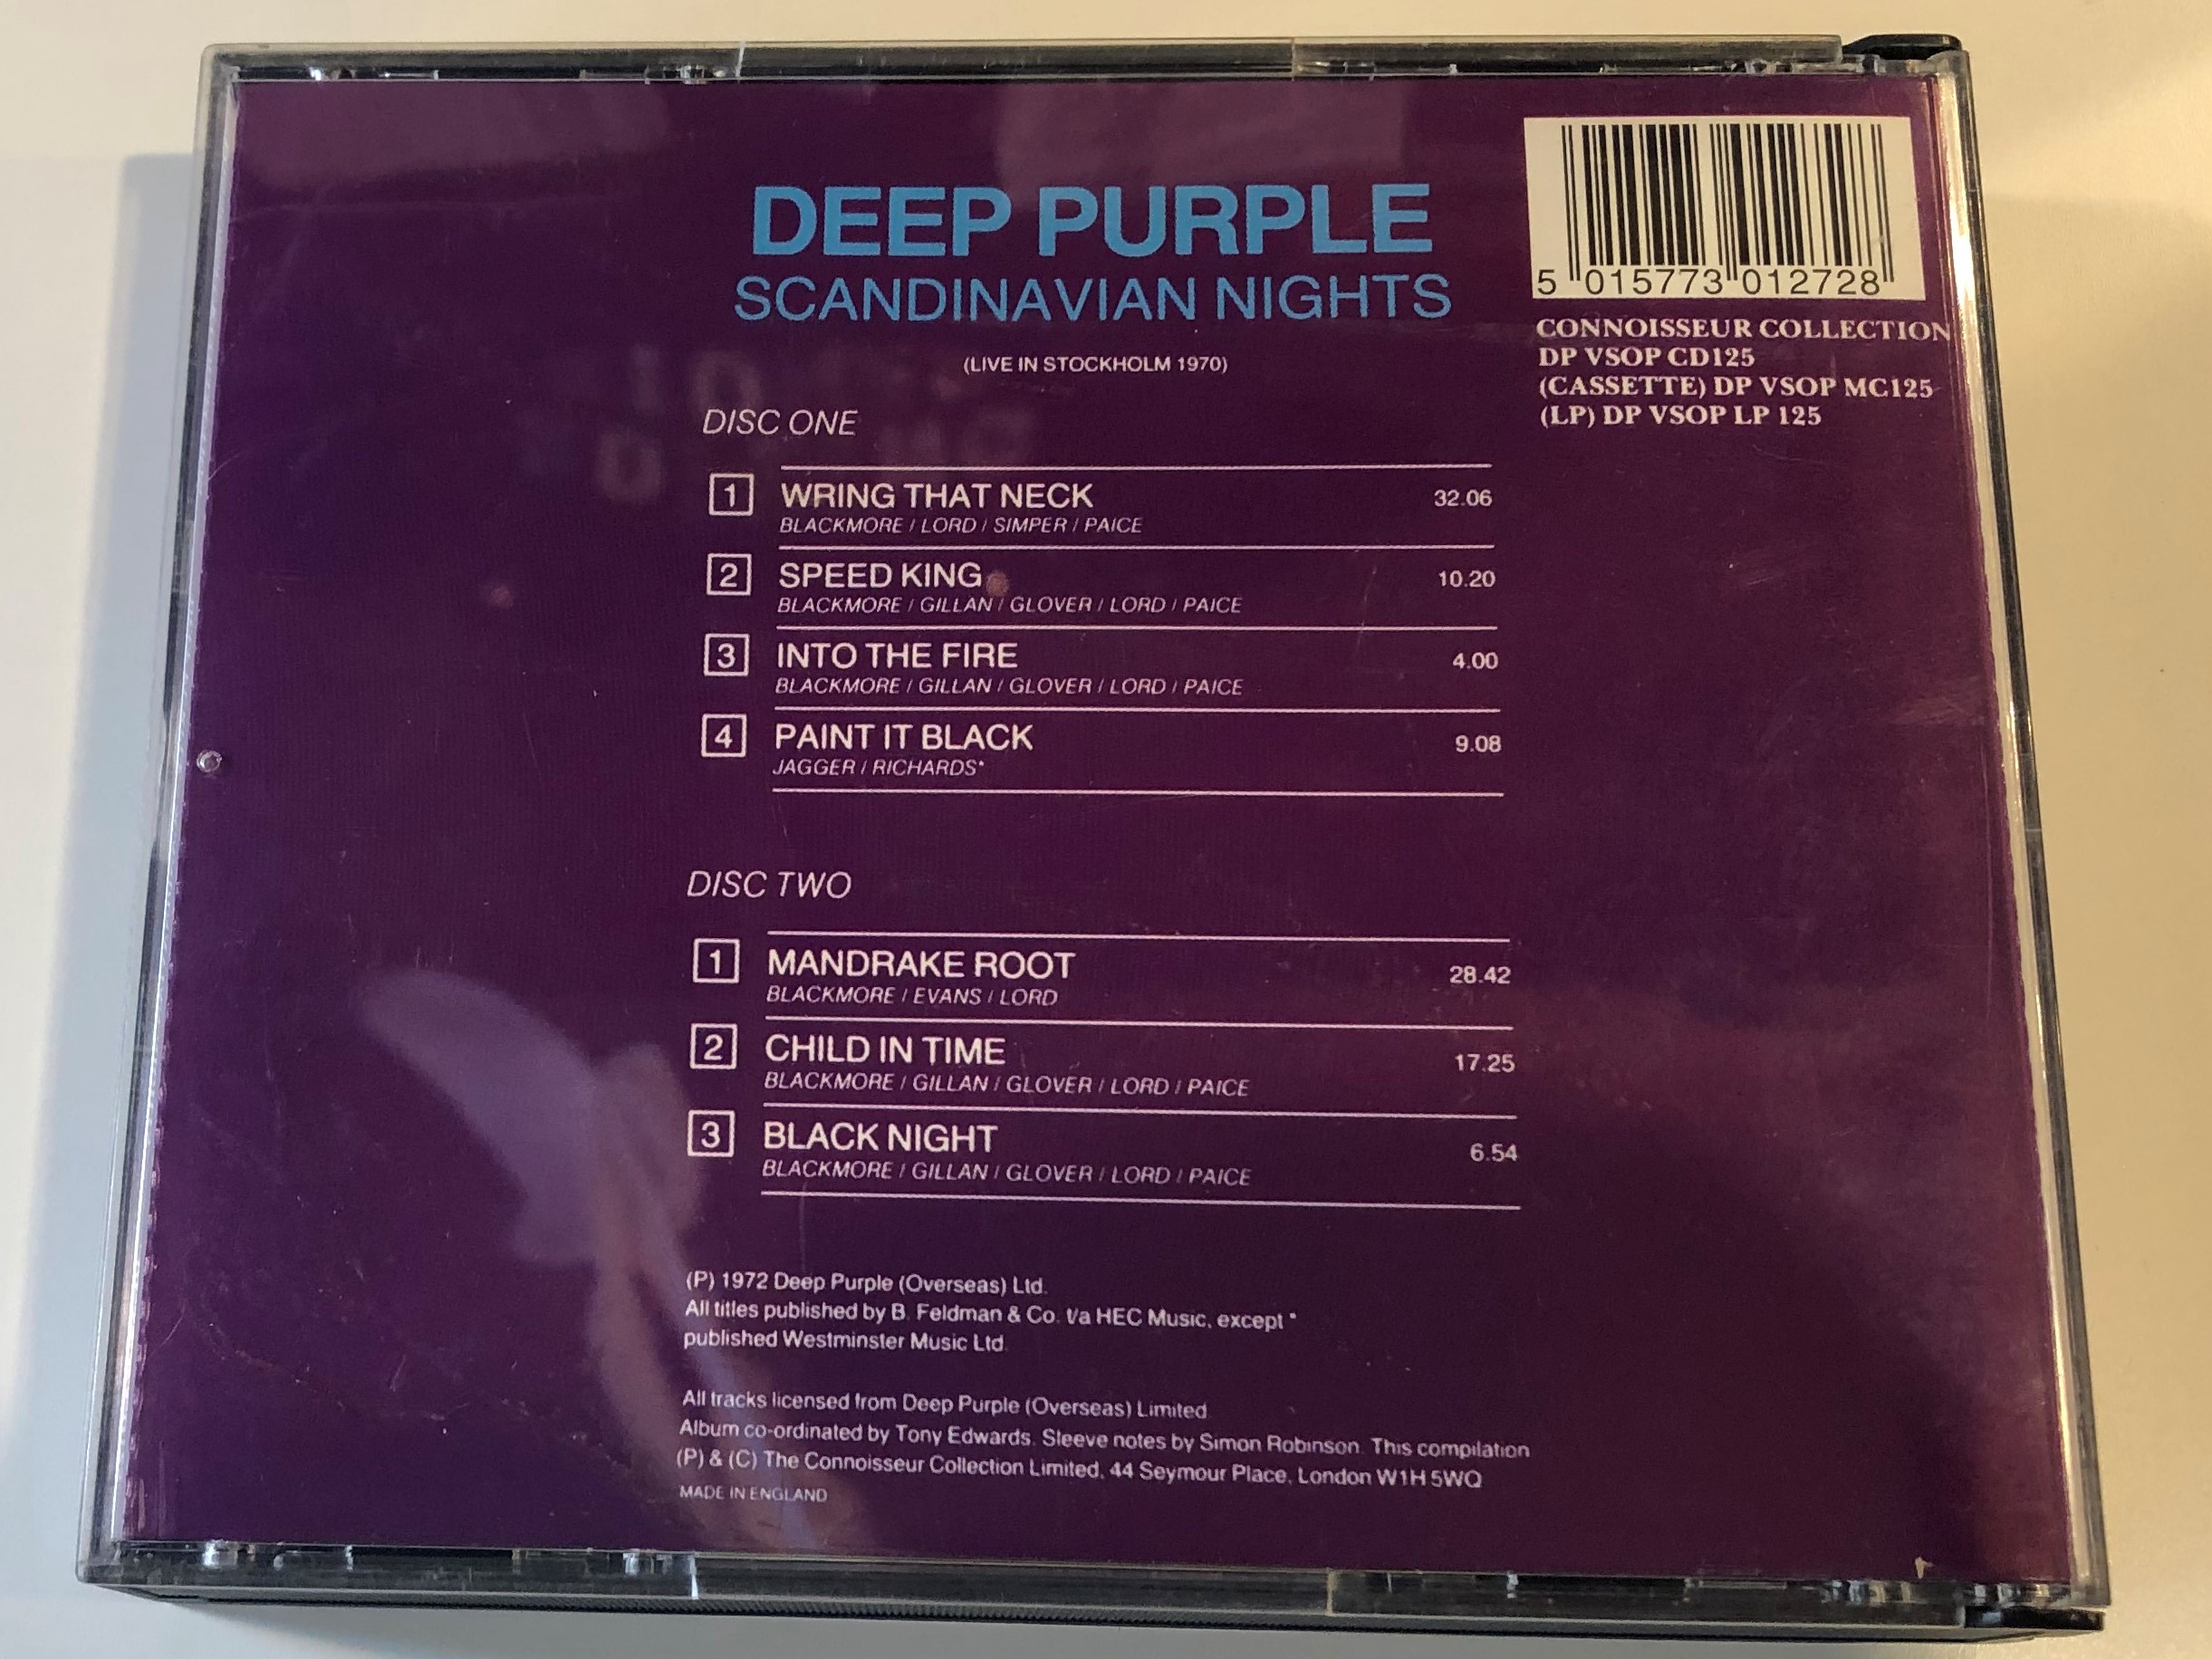 deep-purple-scandinavian-nights-ian-gillan-vocals-roger-glover-bass-jon-lord-keyboards-ian-paice-drums-ritchie-blackmore-guitar-connoisseur-collection-2x-audio-cd-1972-dp-vso.jpg